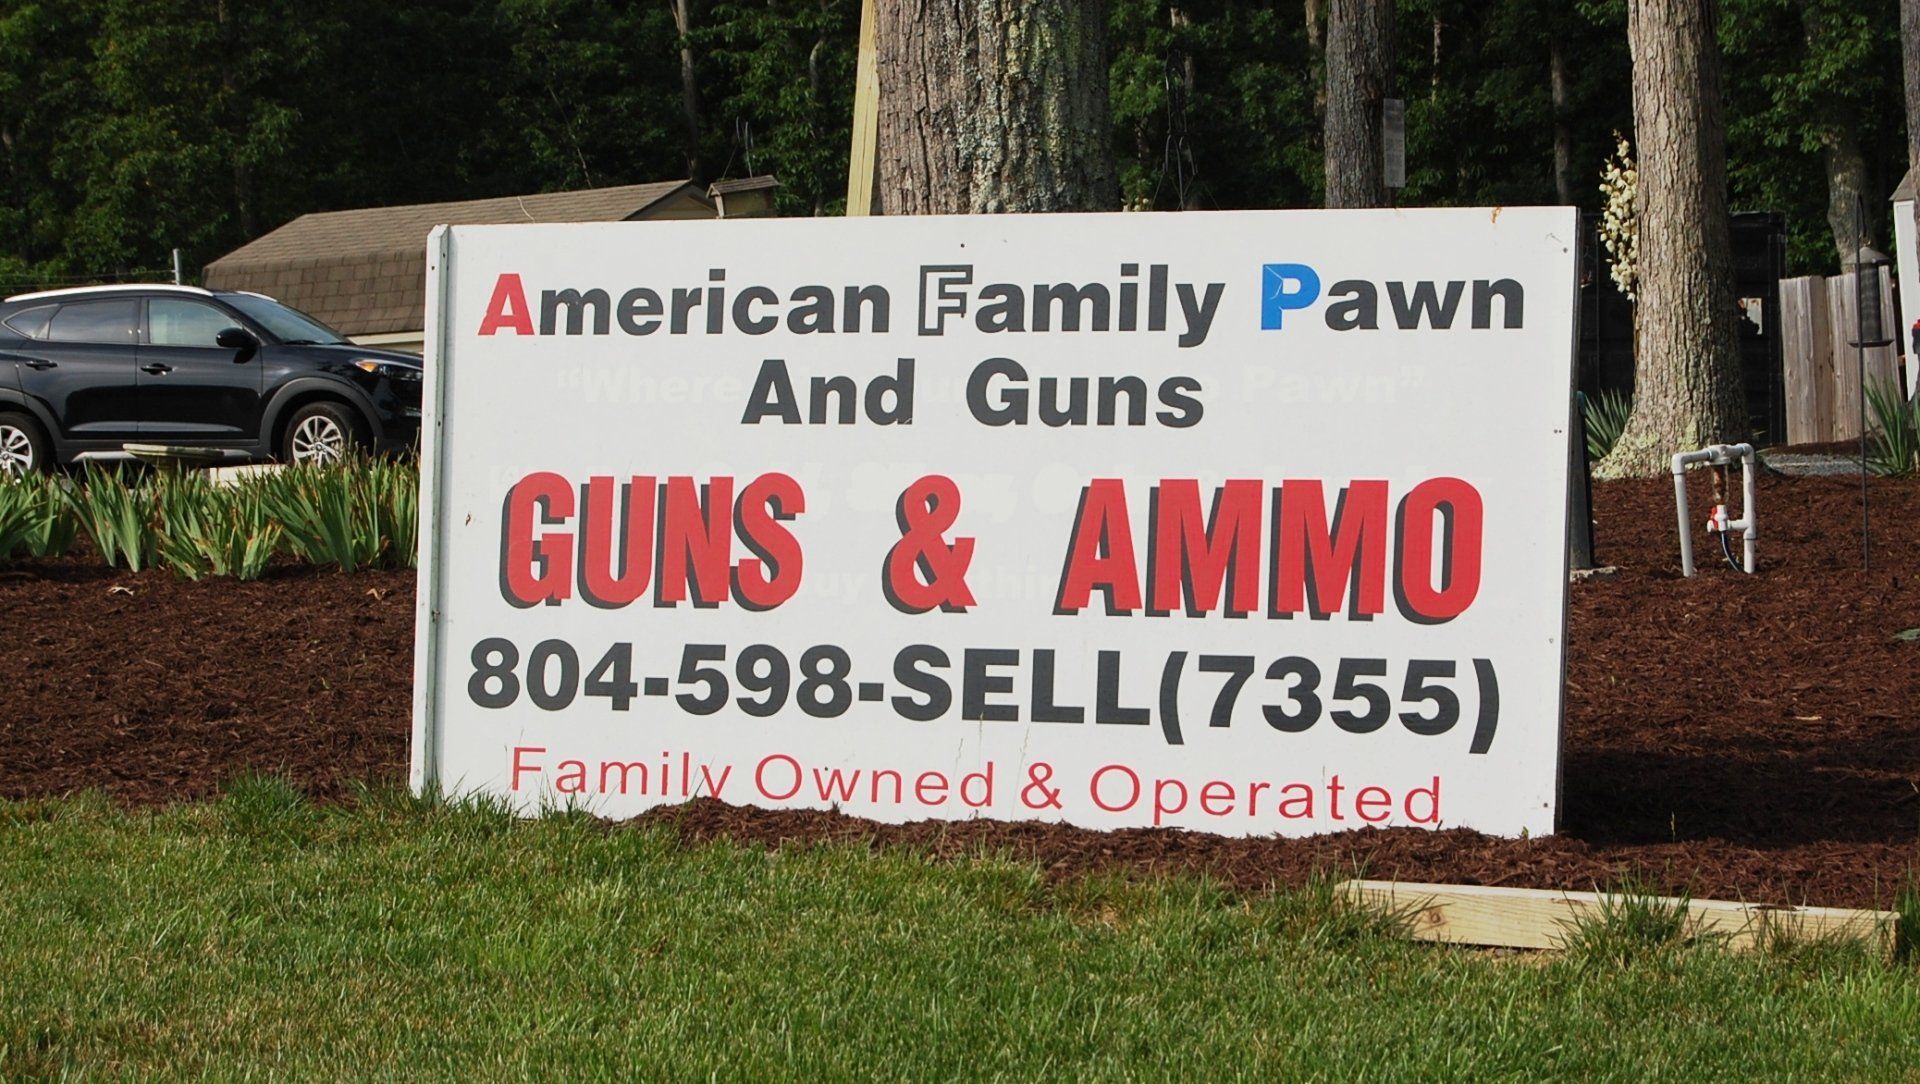 Powhatan Gun Shop — Pawn Shop Sign in Powhatan, VA